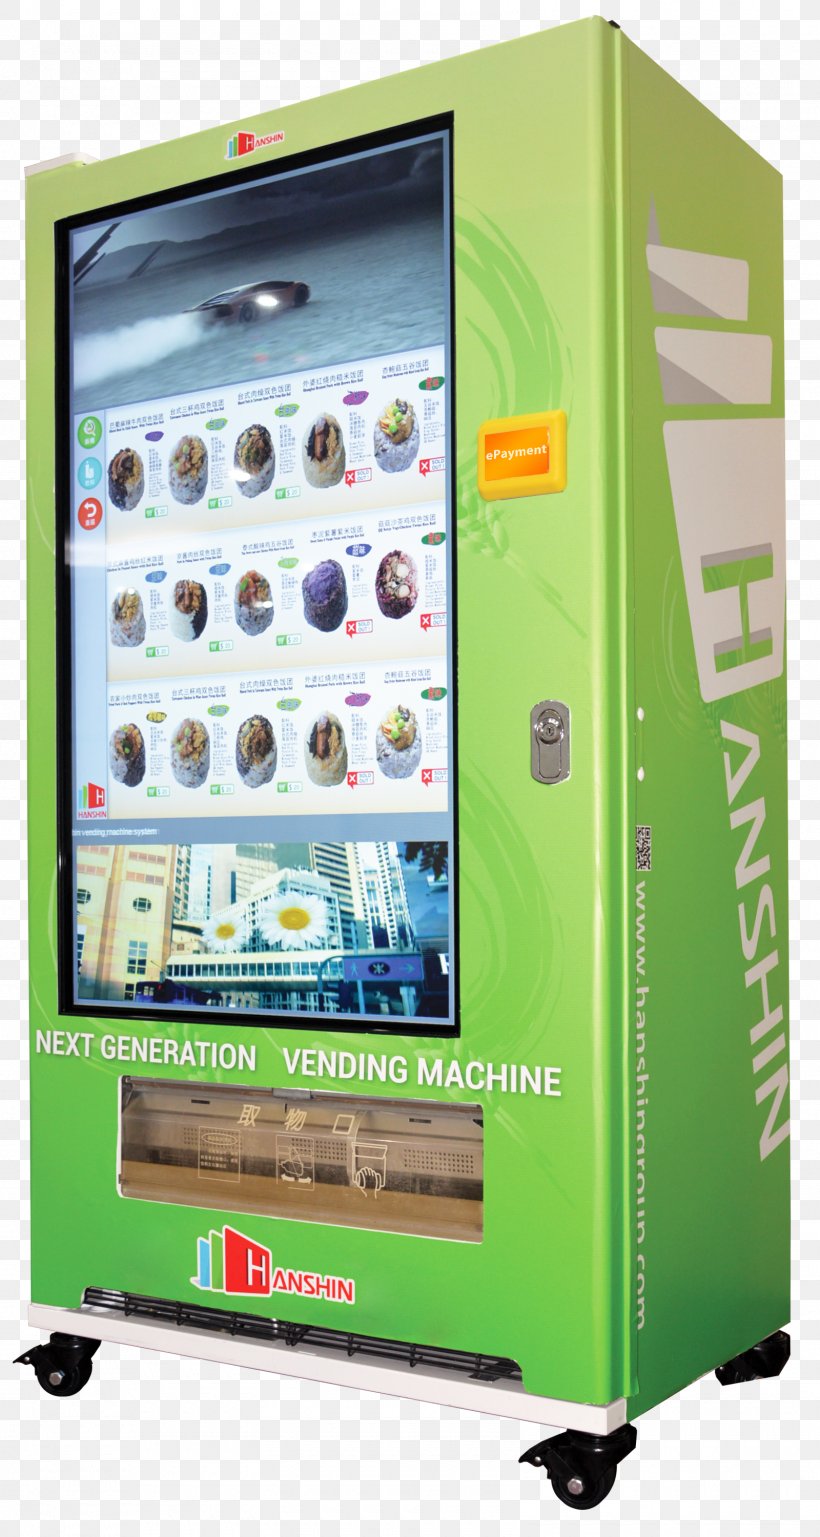 Vending Machines Refrigerator, PNG, 1600x3000px, Vending Machines, Home Appliance, Machine, Refrigerator, Vending Machine Download Free